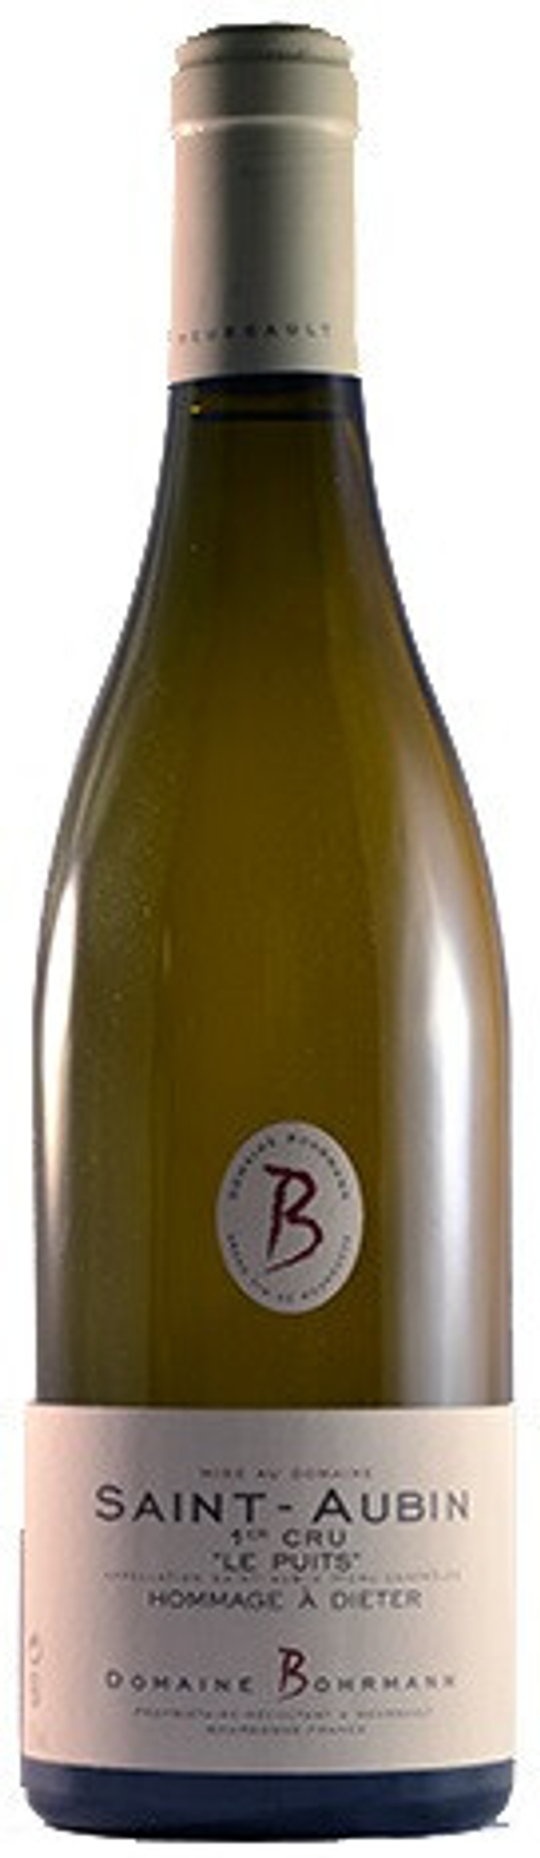 Вино Domaine Bohrmann Saint-Aubin 1er Cru Le Puits AOC, 2020, 0,75 л.